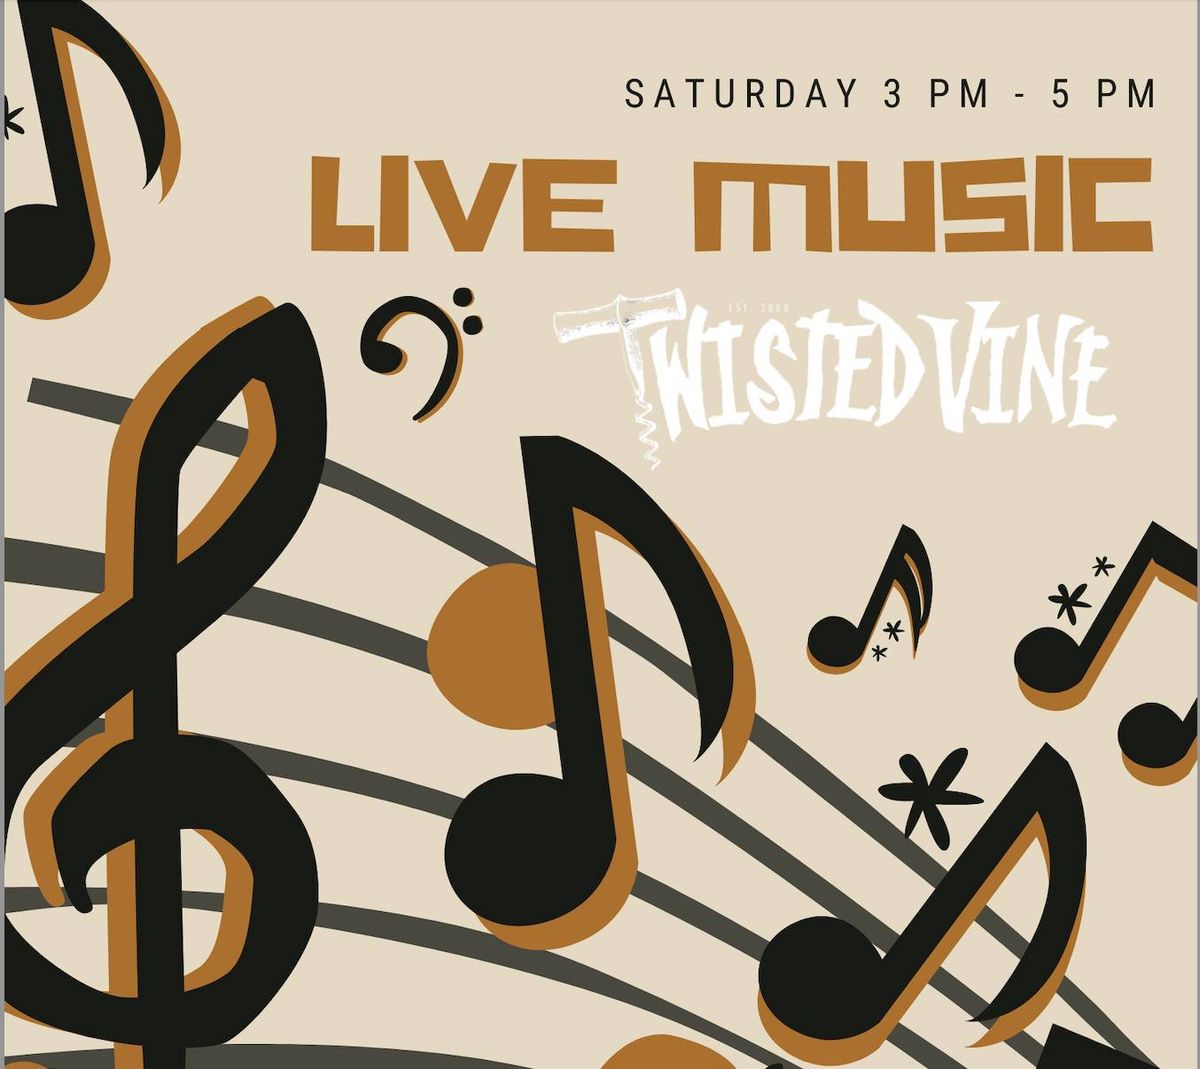 Saturday Live Music - Audio Avenues